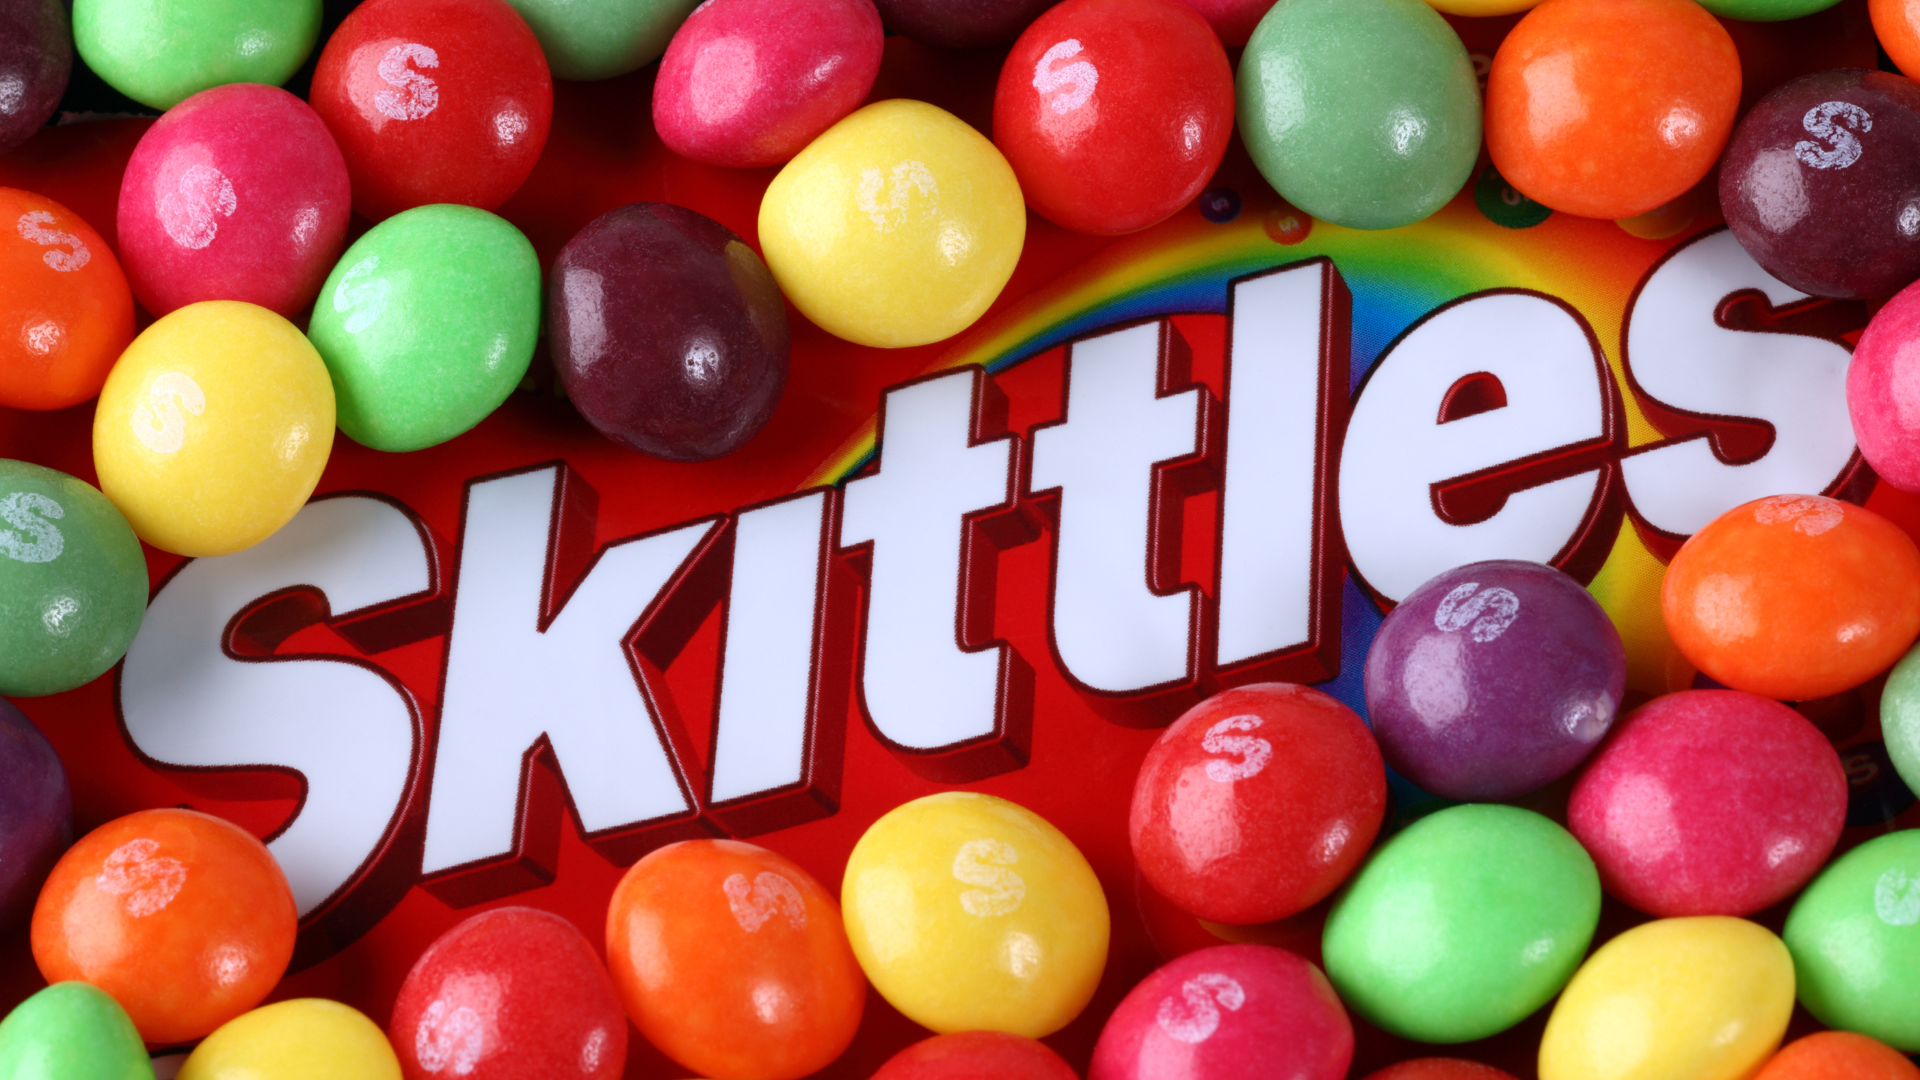 Skittles conter toxina perigosa.